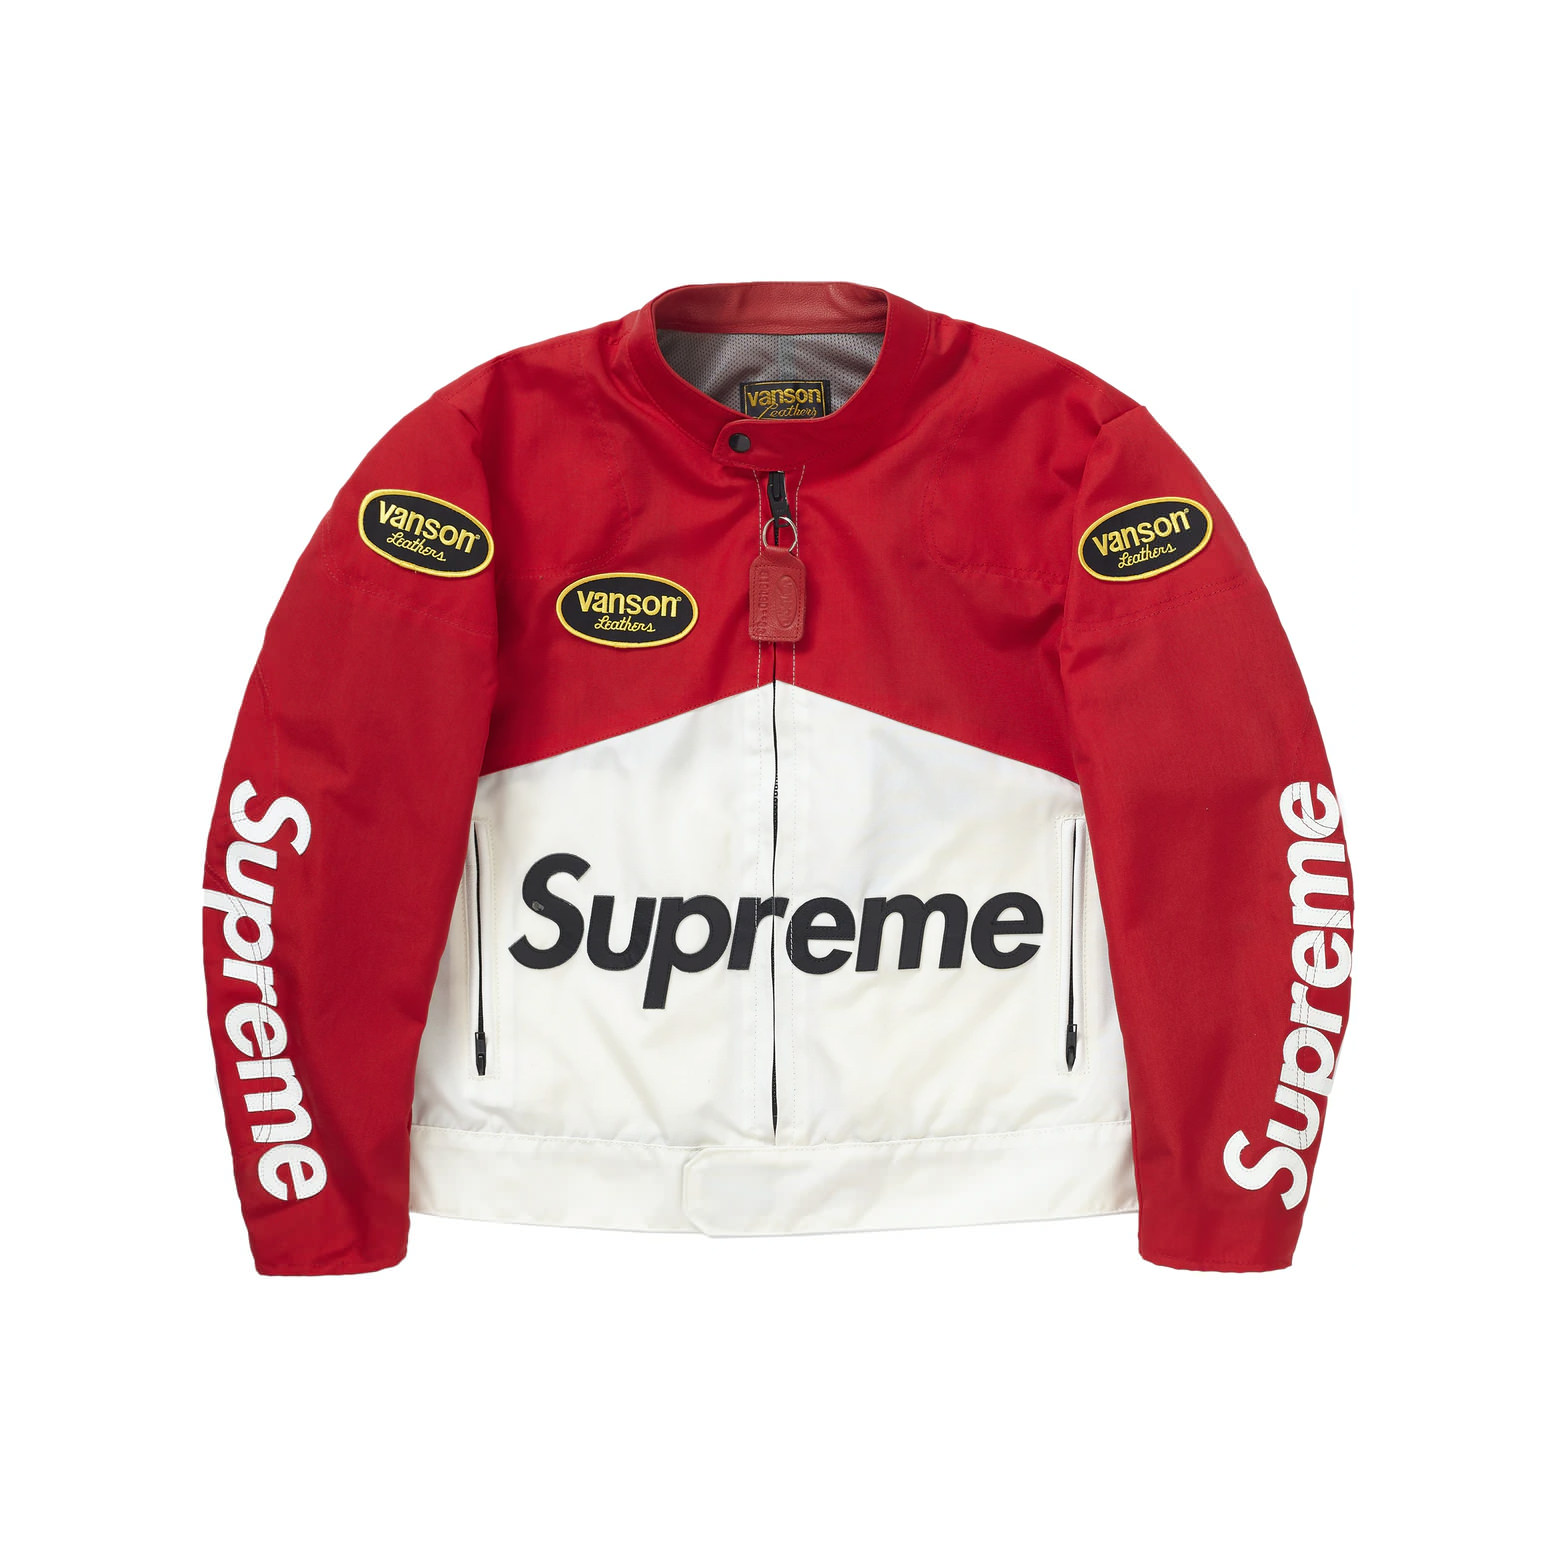 Supreme Vanson Leathers Cordura Jacket RedSupreme Vanson Leathers